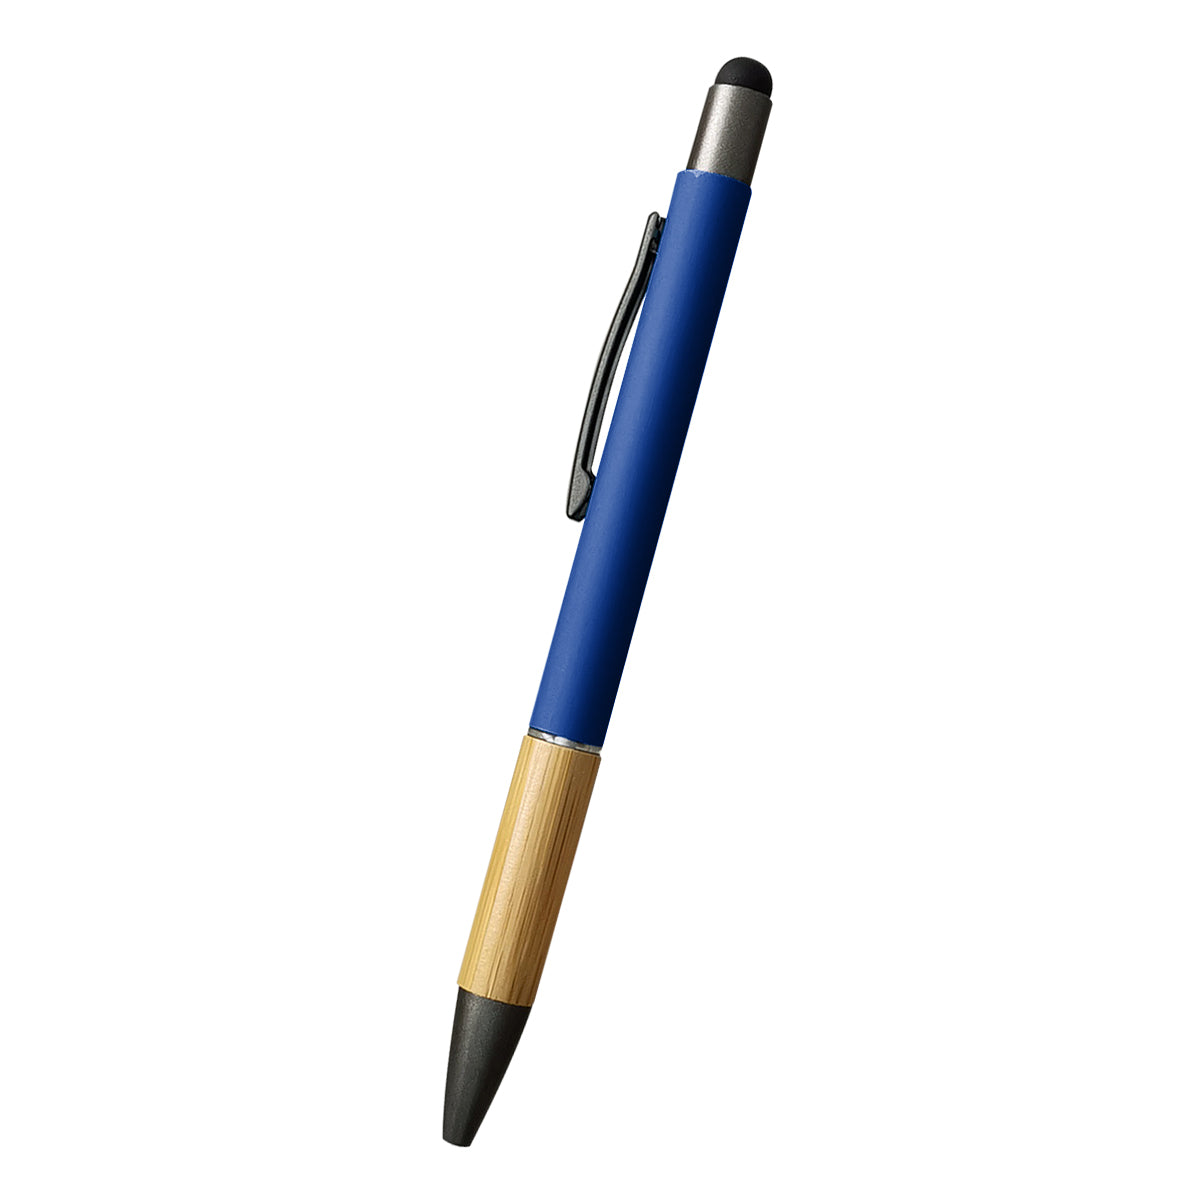 Customizable Aidan bamboo stylus pen in blue.